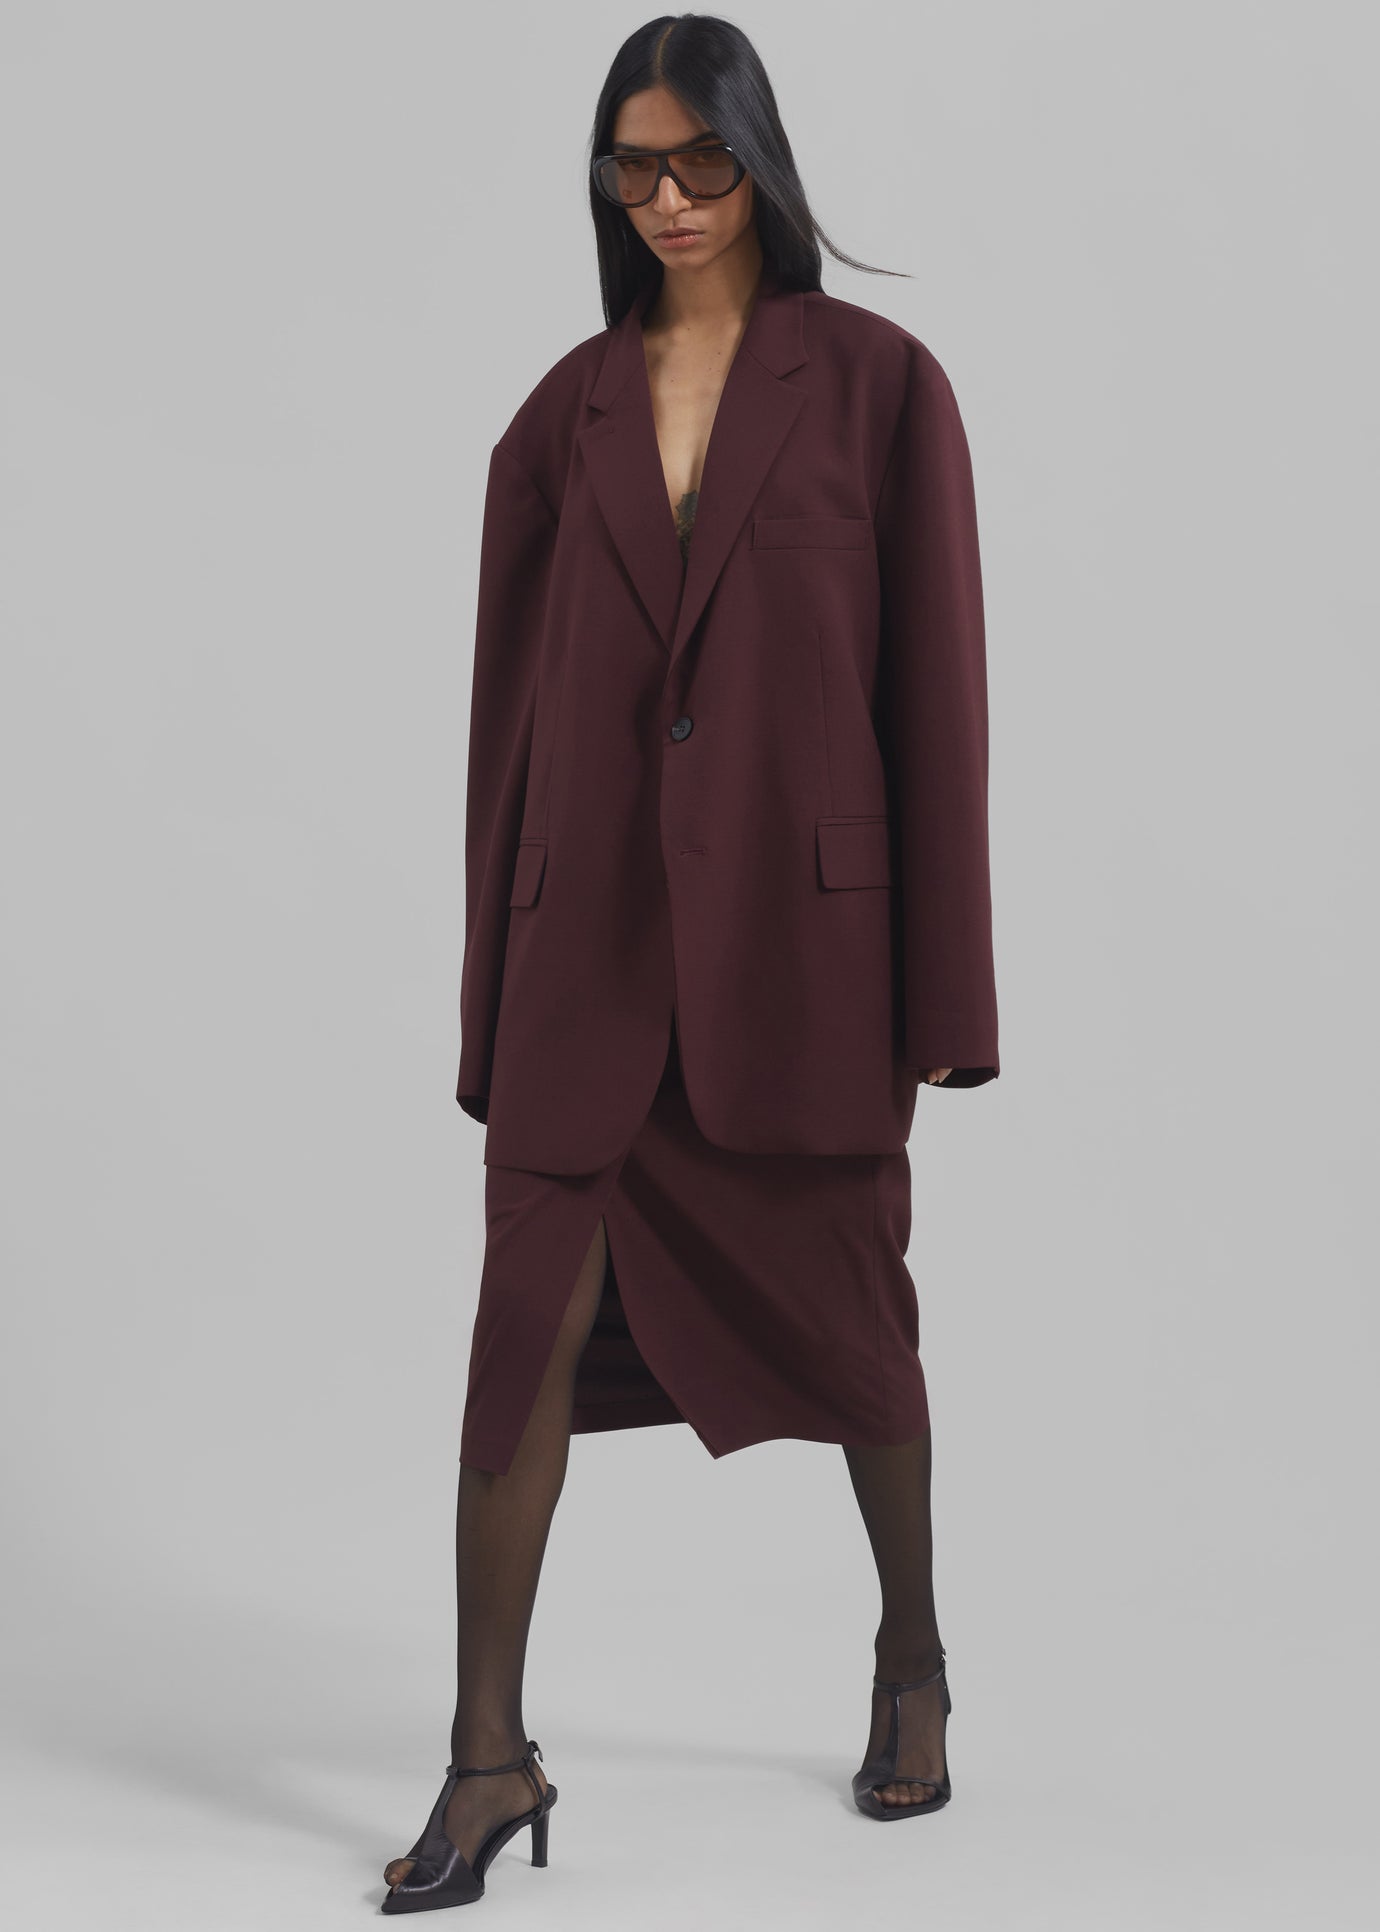 The & Women\'s Jackets, Page Coats, Blazer Shop – – Frankie Trench 2